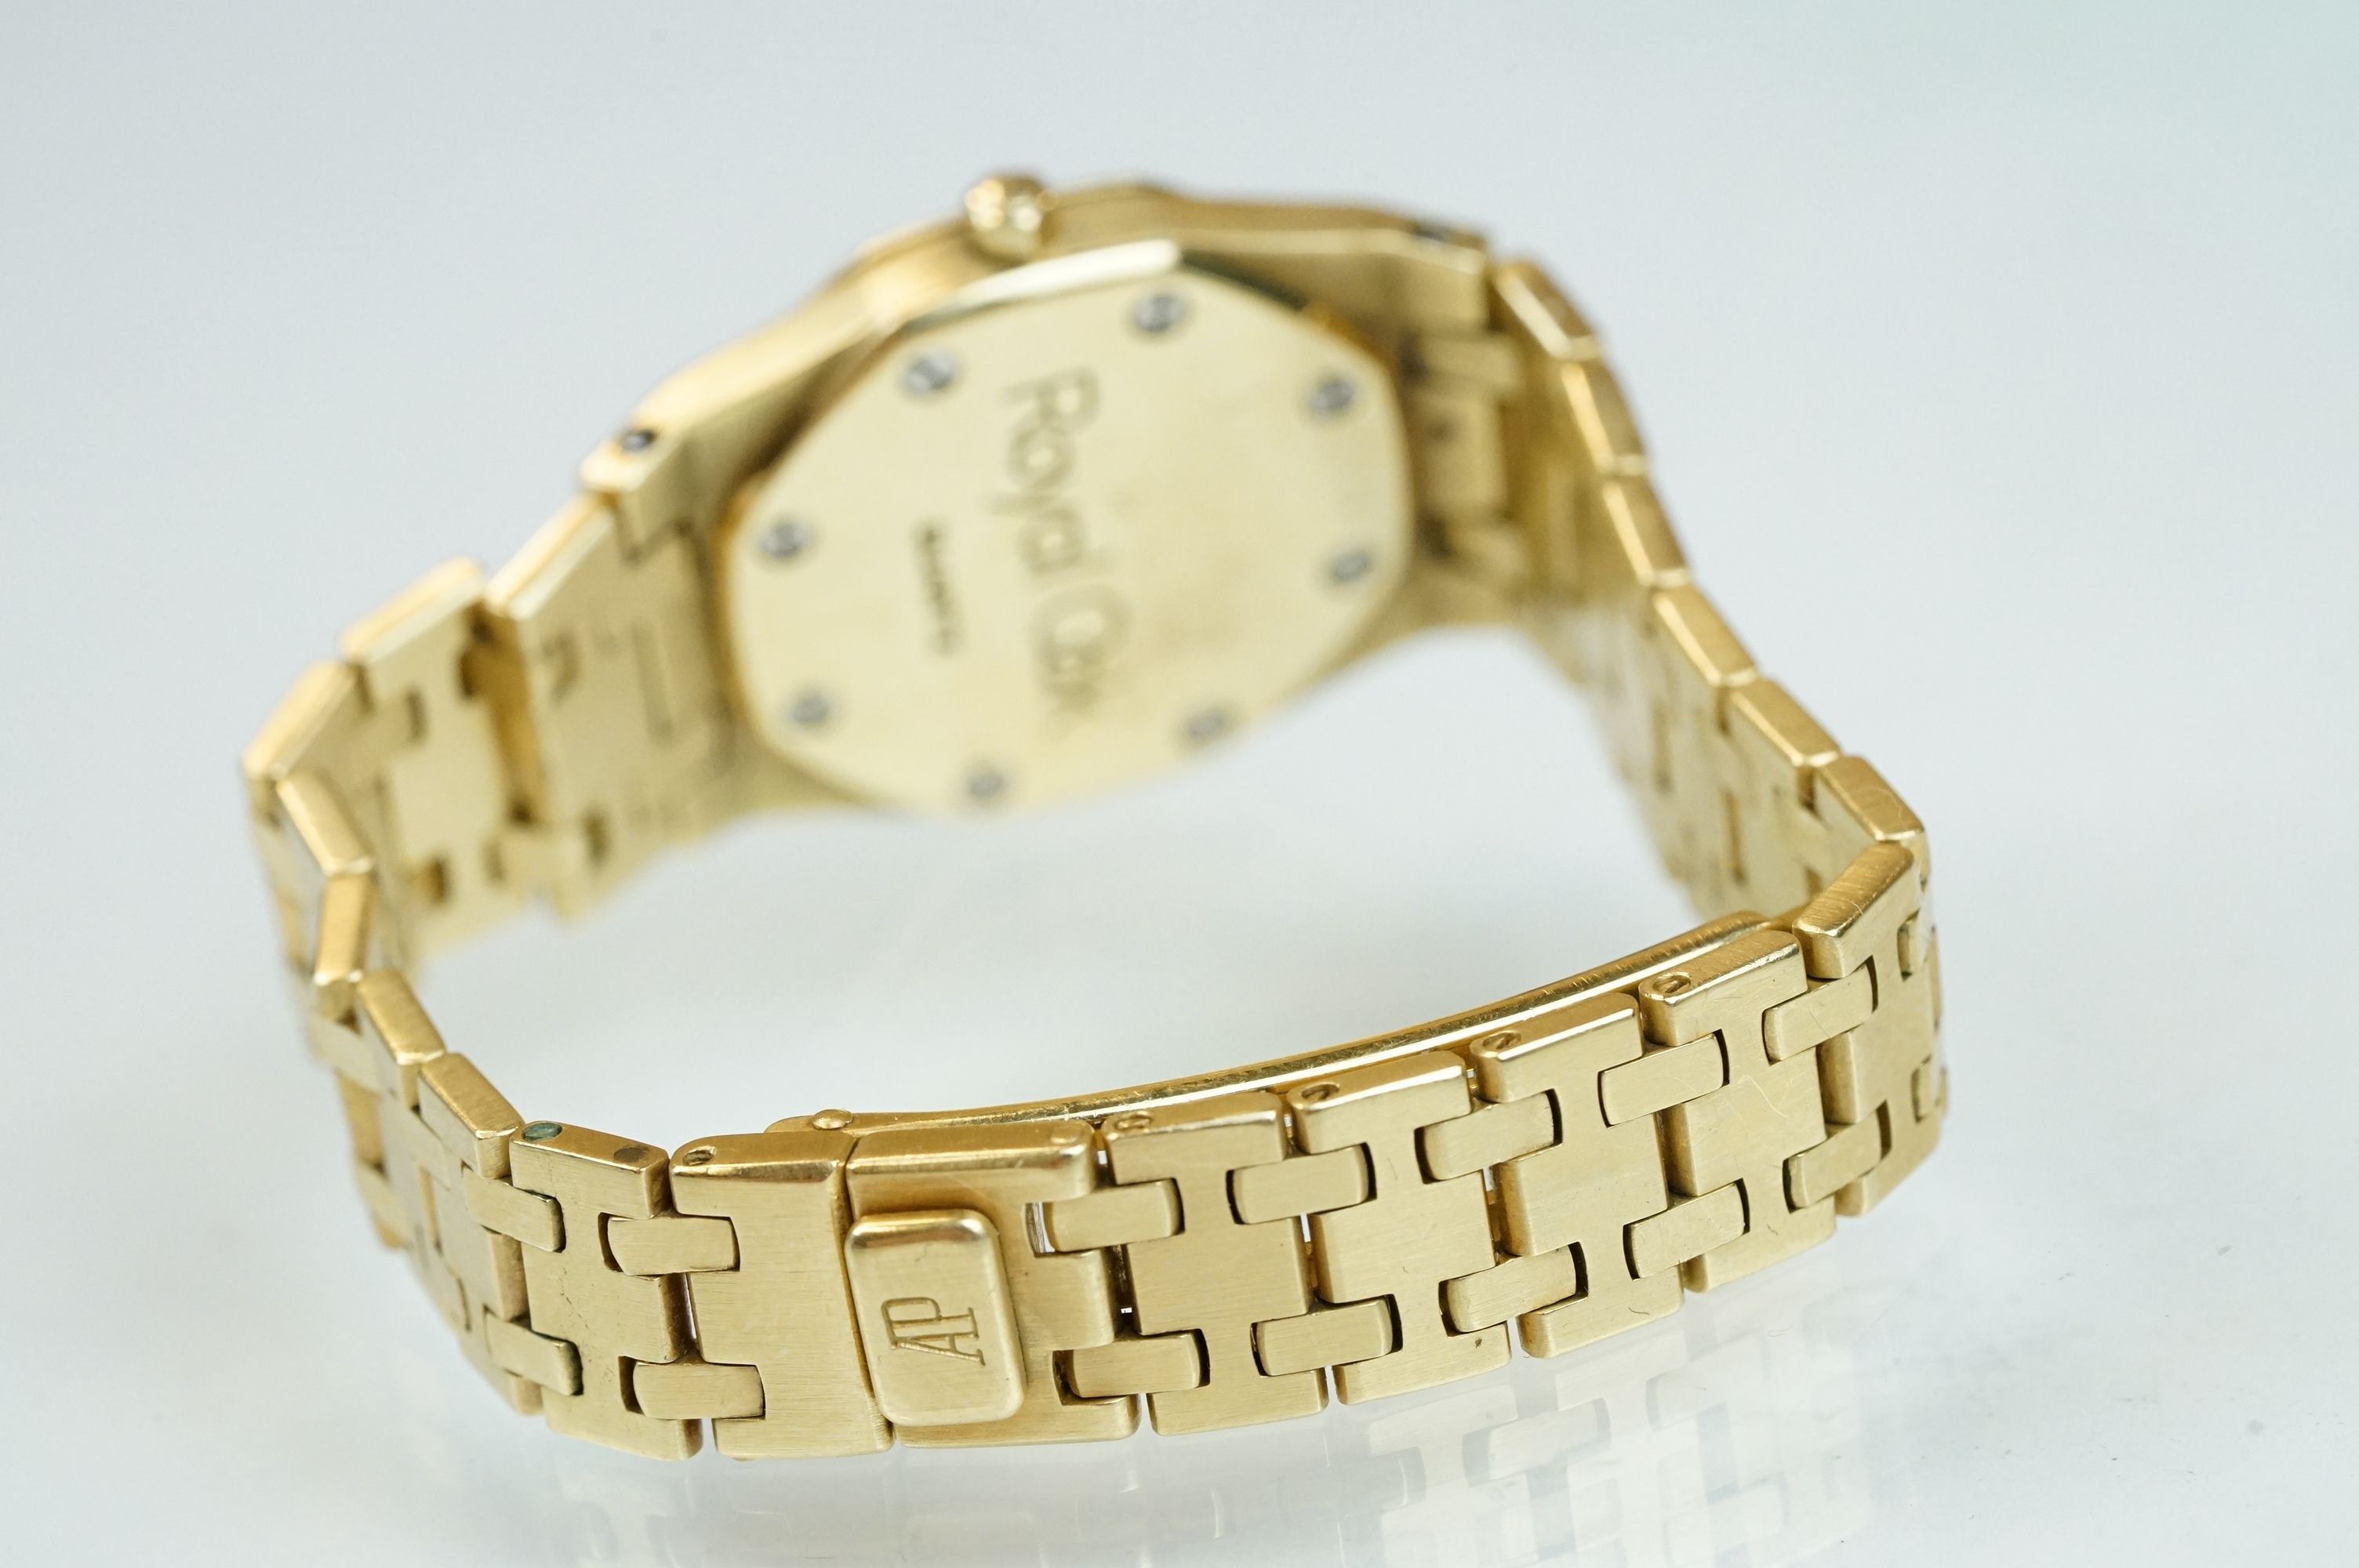 Audemars Piguet 18K gold quartz bracelet watch, fully hallmarked 18ct gold bracelet - Image 9 of 17